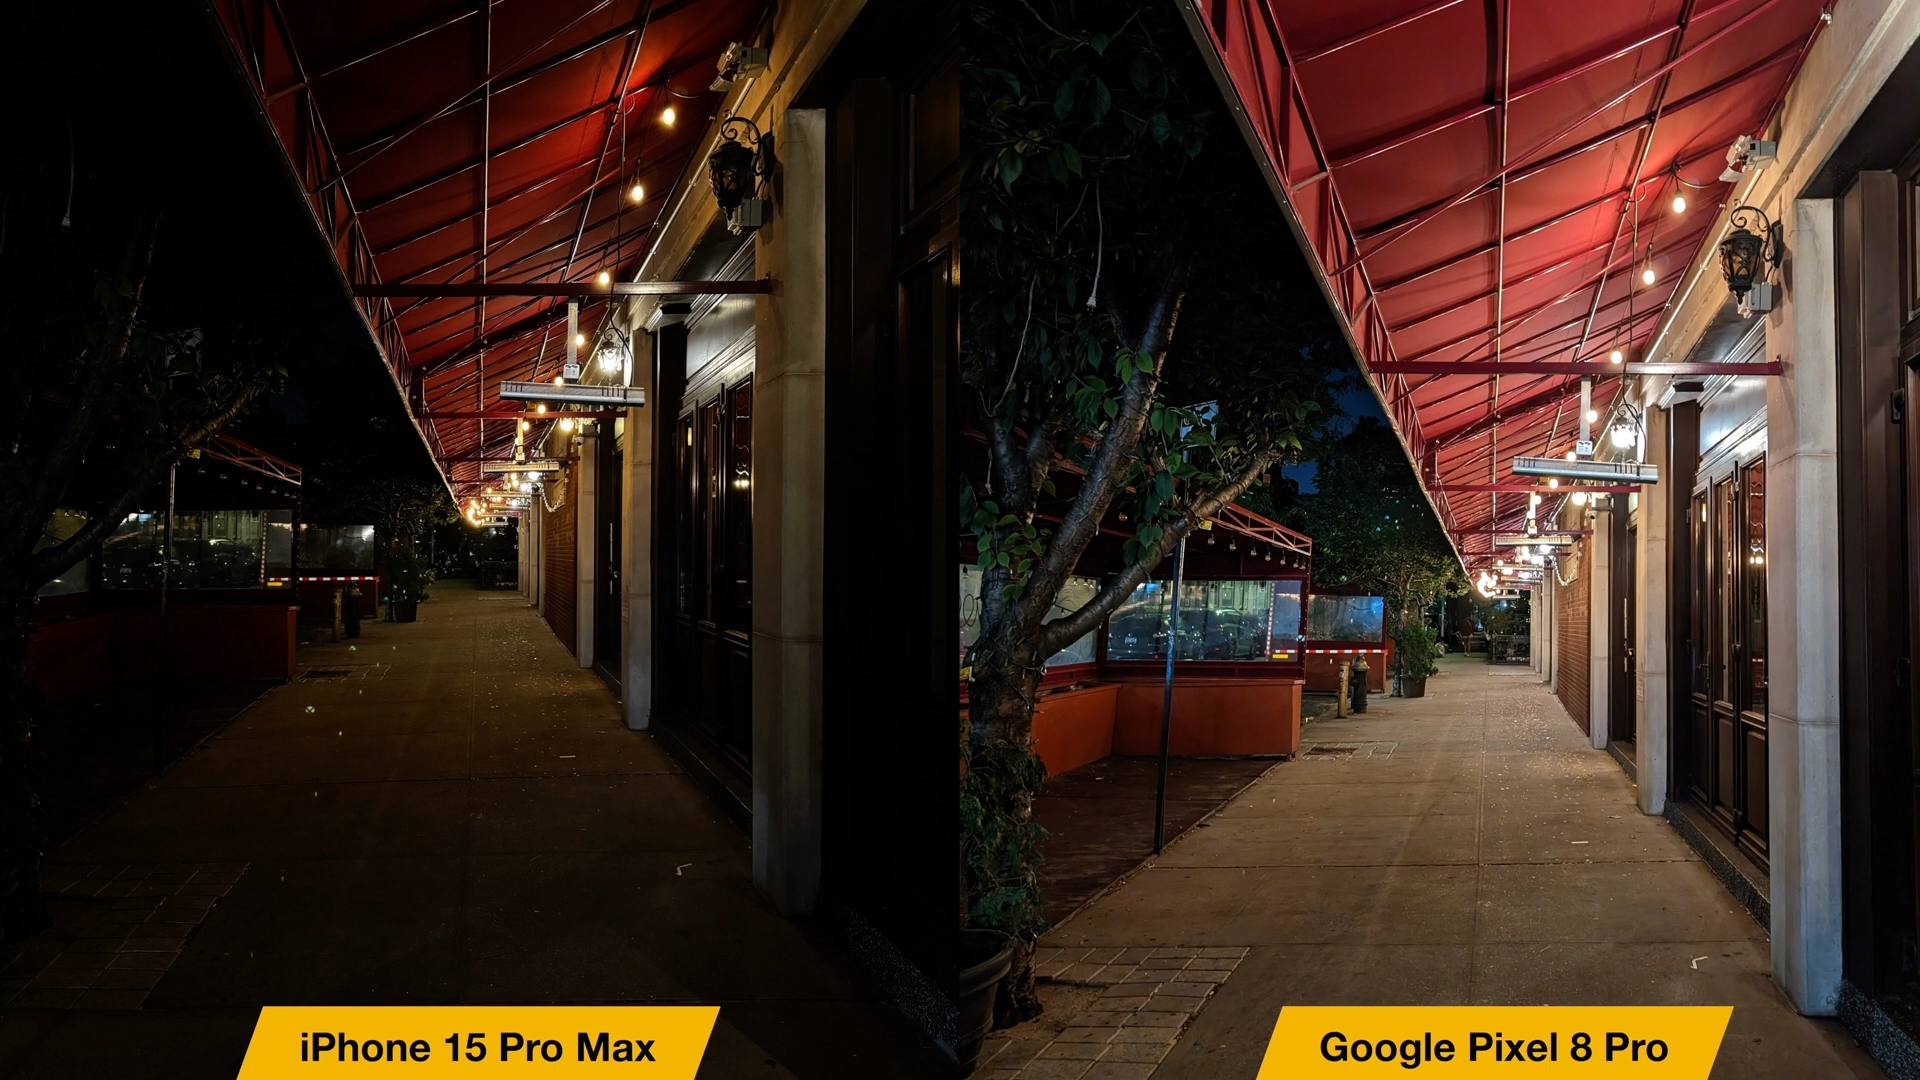 من iPhoneIslam.com، صورتان لشارع به مصباحان، مقارنة بين iPhone 15 Pro Max وGoogle Pixel 8 Pro.